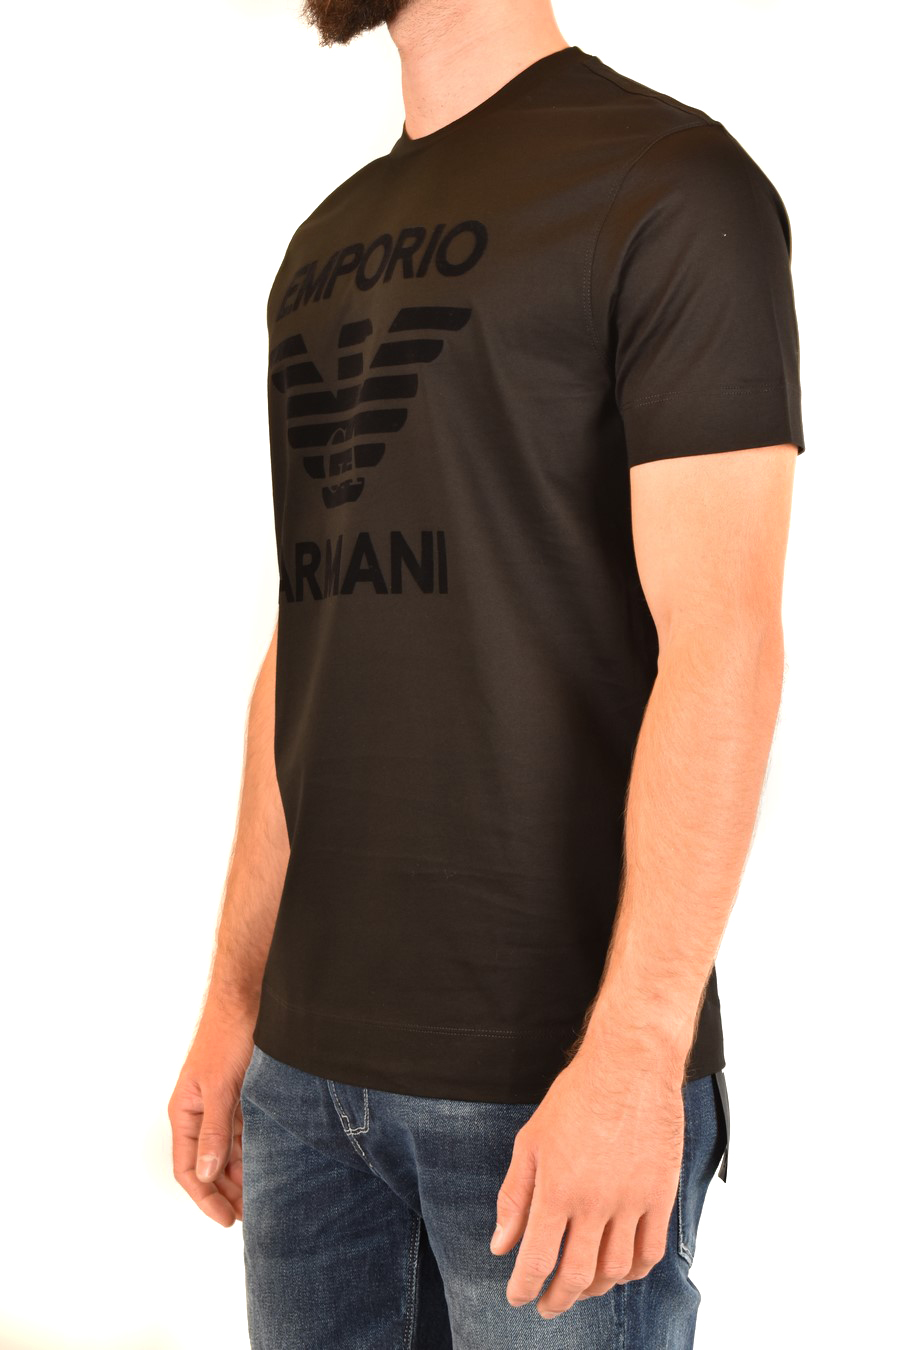 EMPORIO ARMANI T-shirts | ViganoBoutique.com